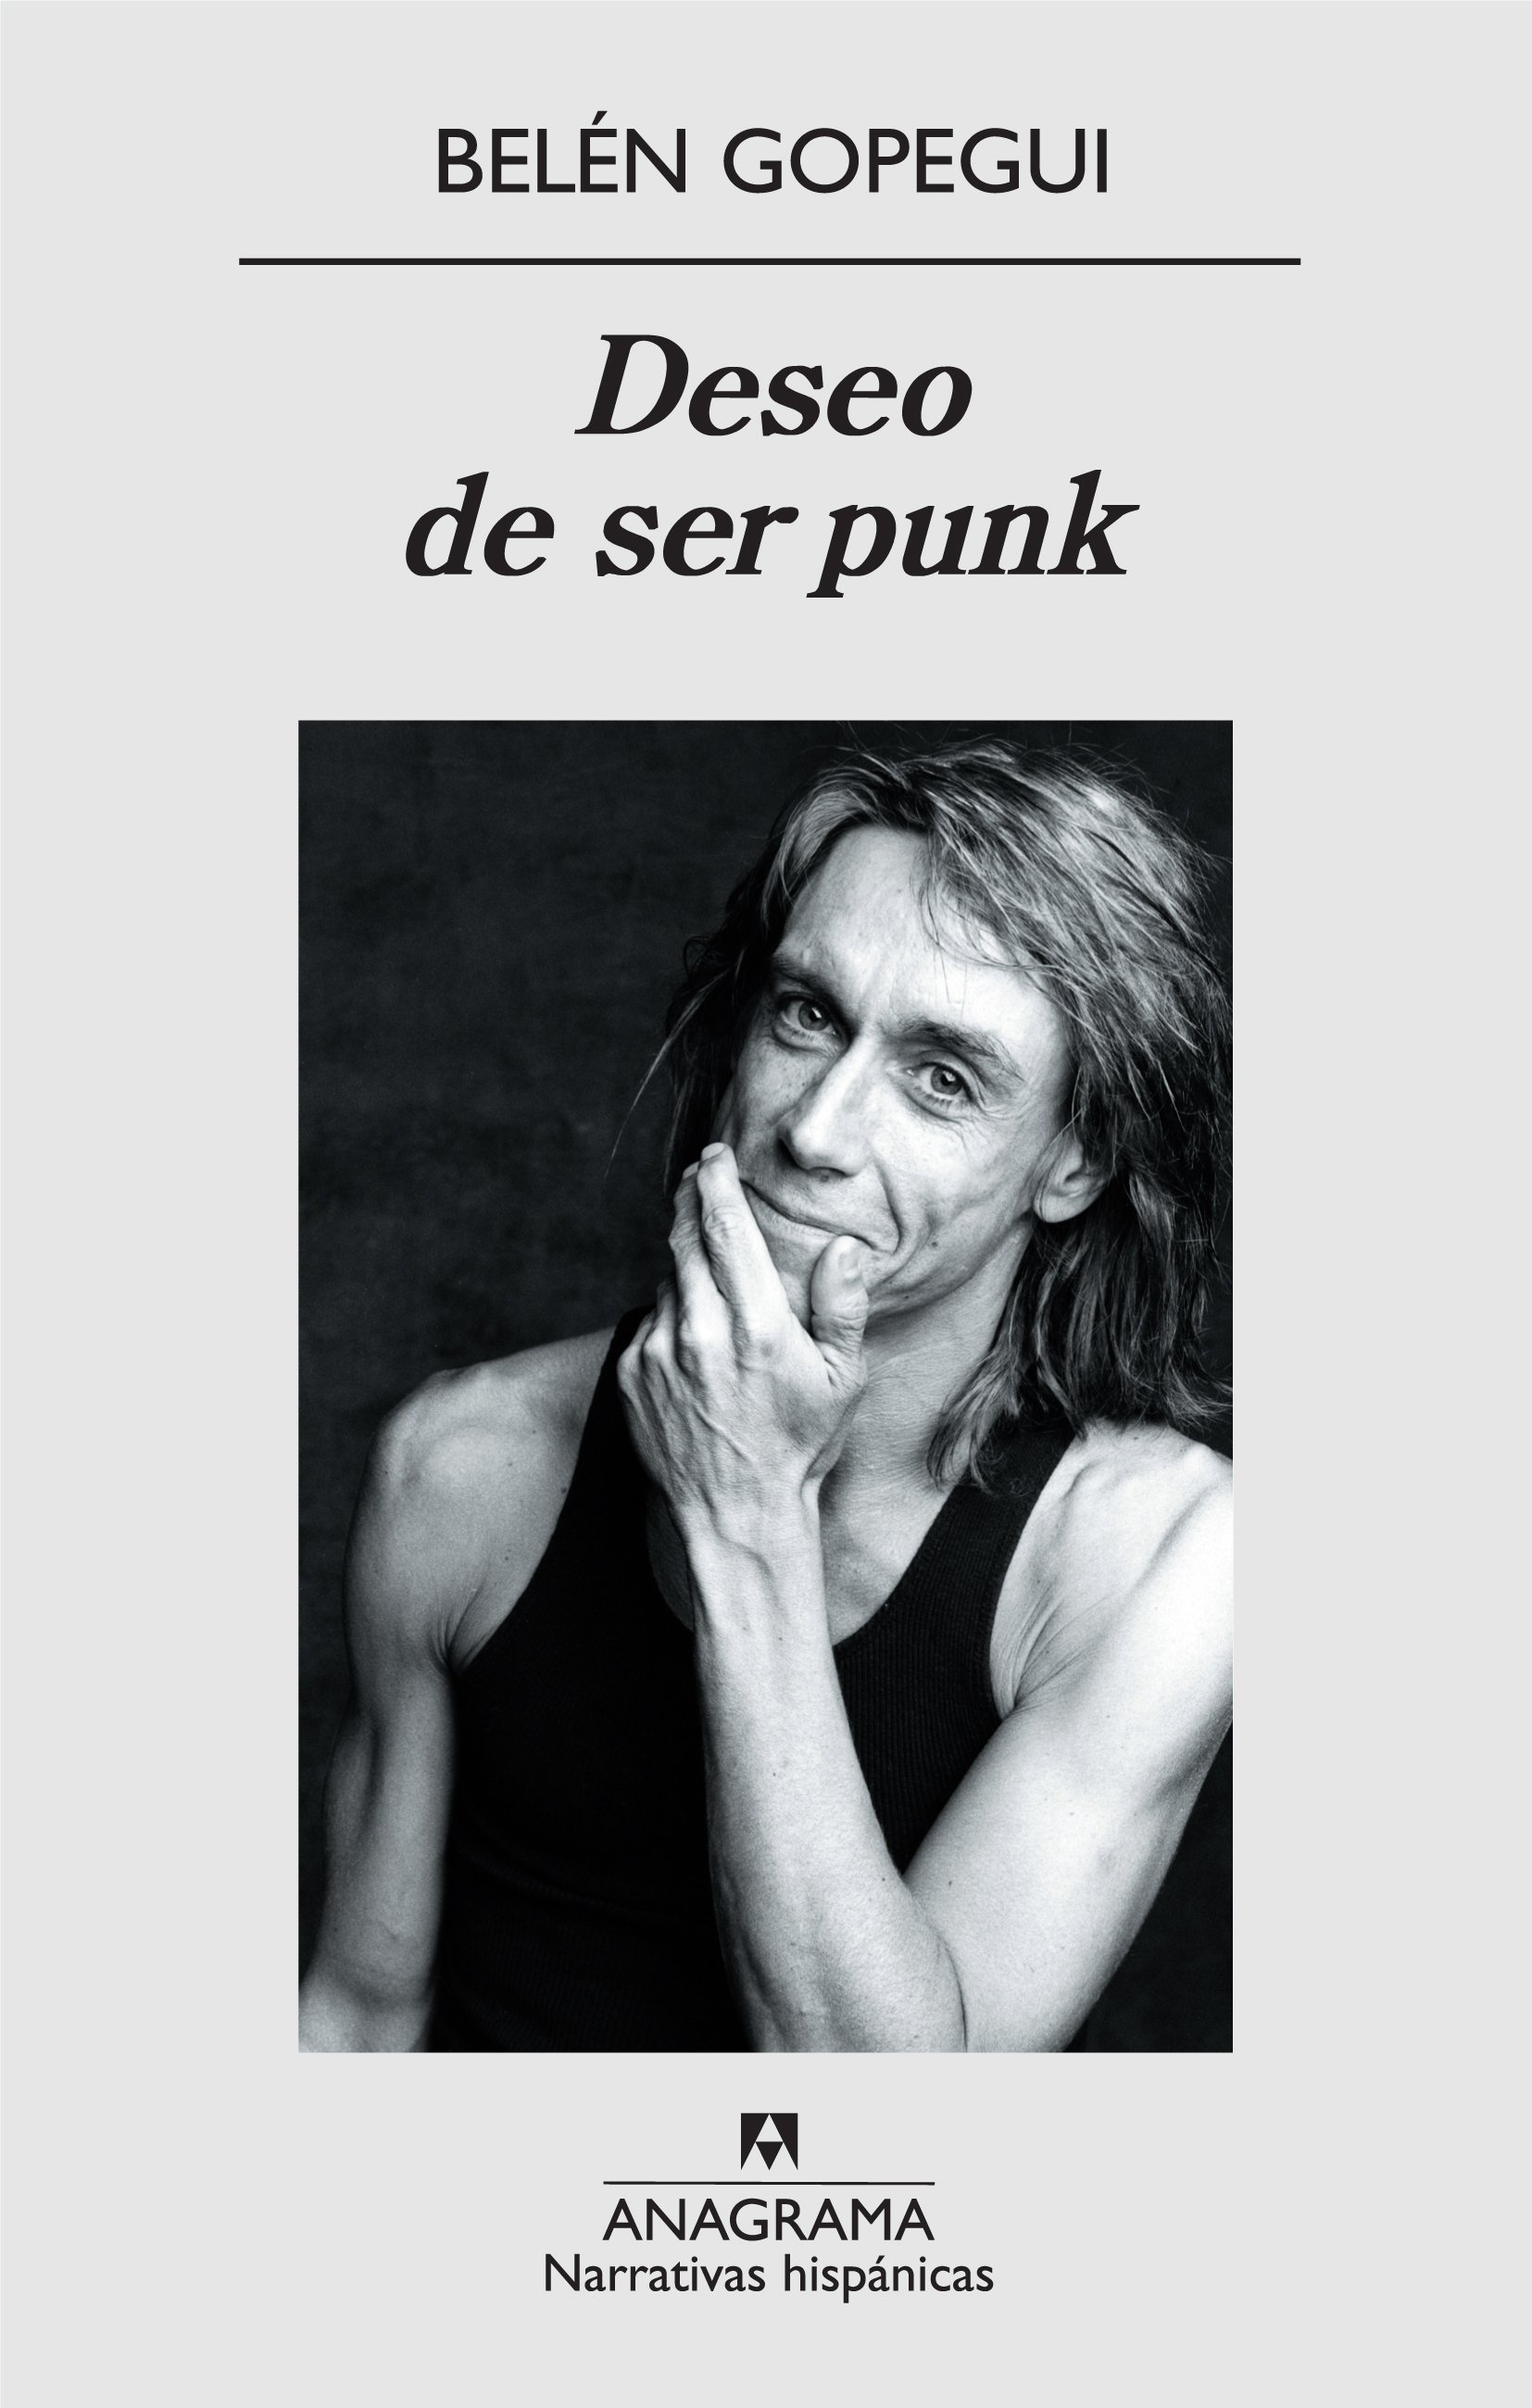 Belén Gopegui: Deseo ser punk (Spanish language, 2009, Editorial Anagrama)